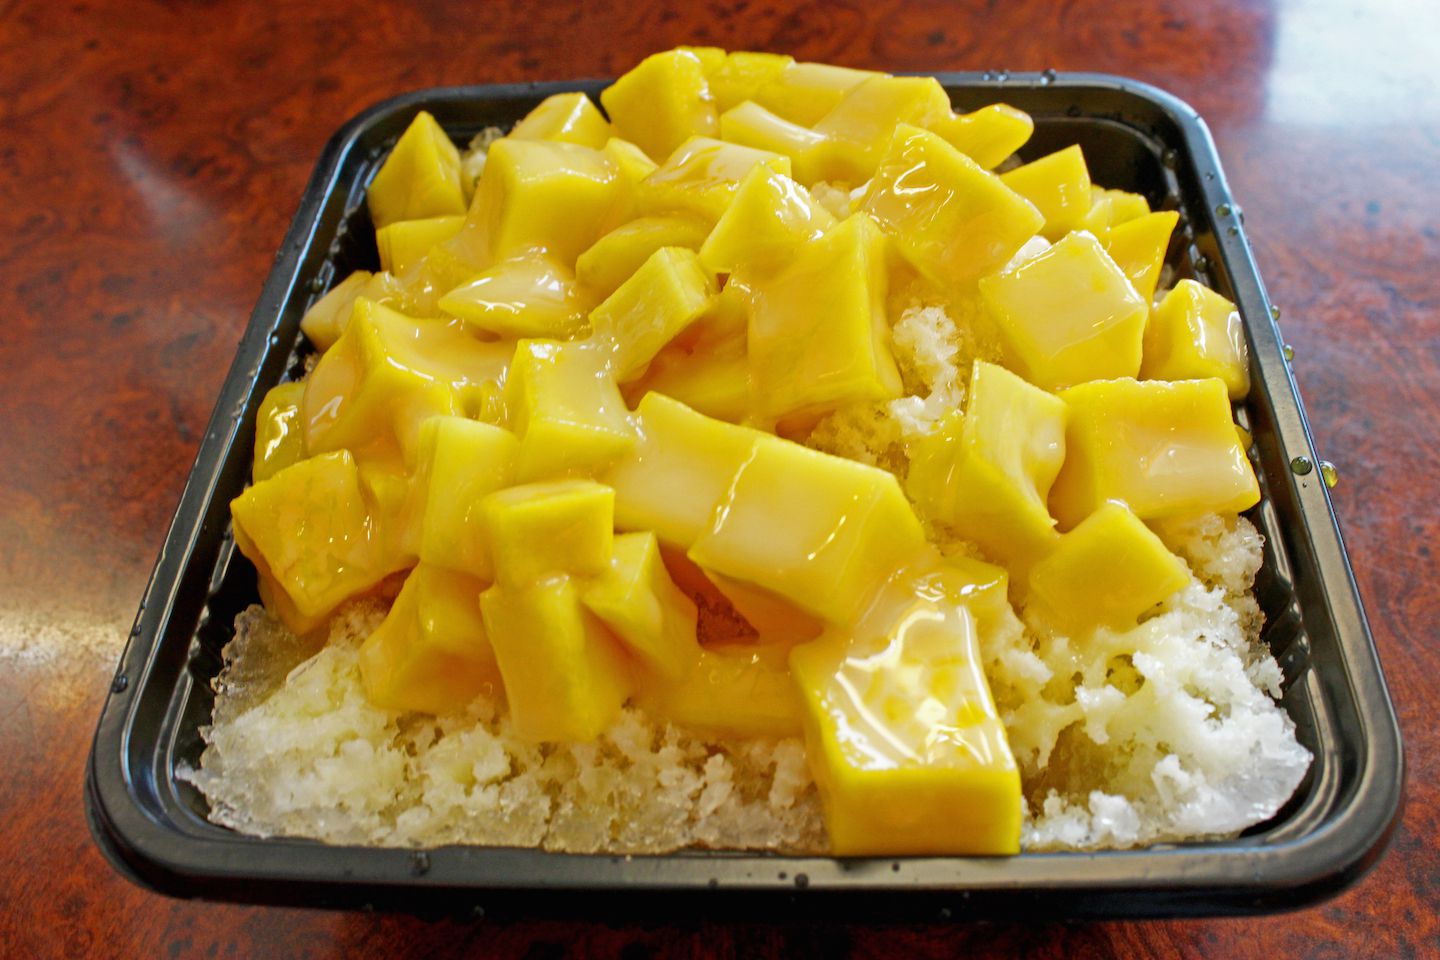 Mango shaved ice with ice chunks and mango pieces